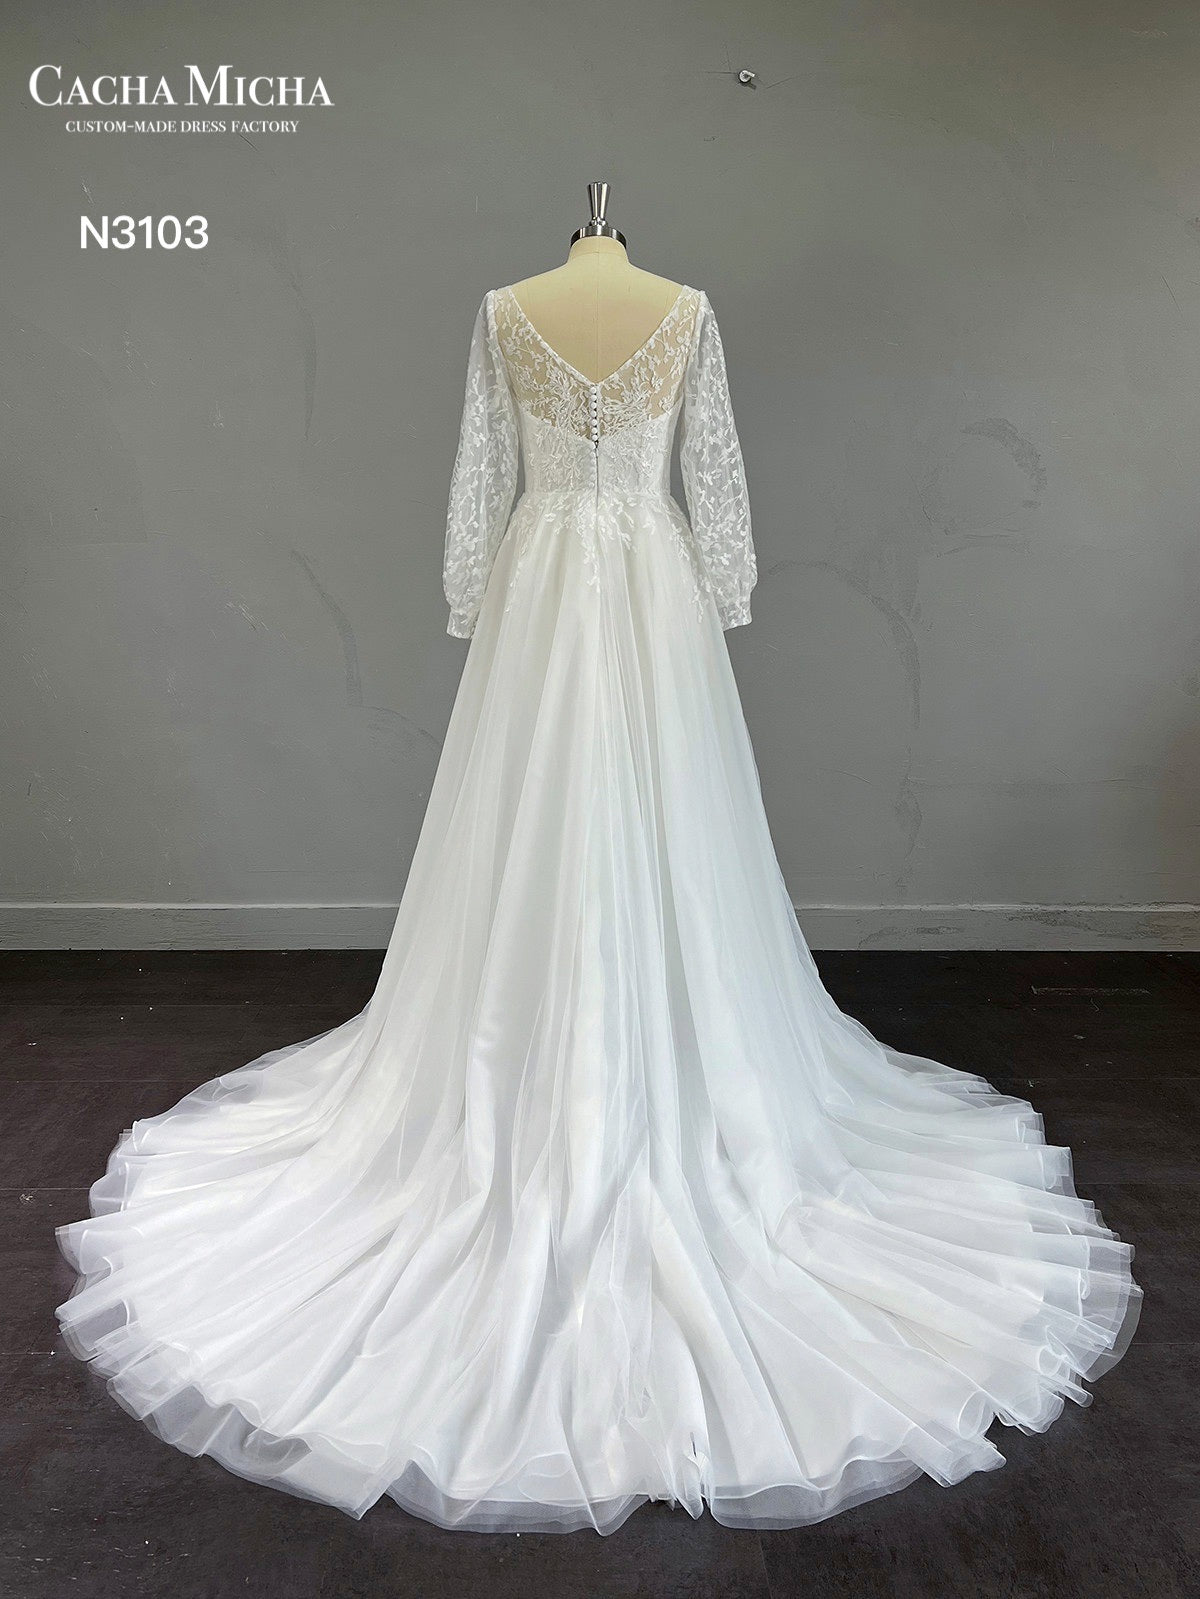 Lace Long Sleeves Classic Boho Wedding Dress N3103